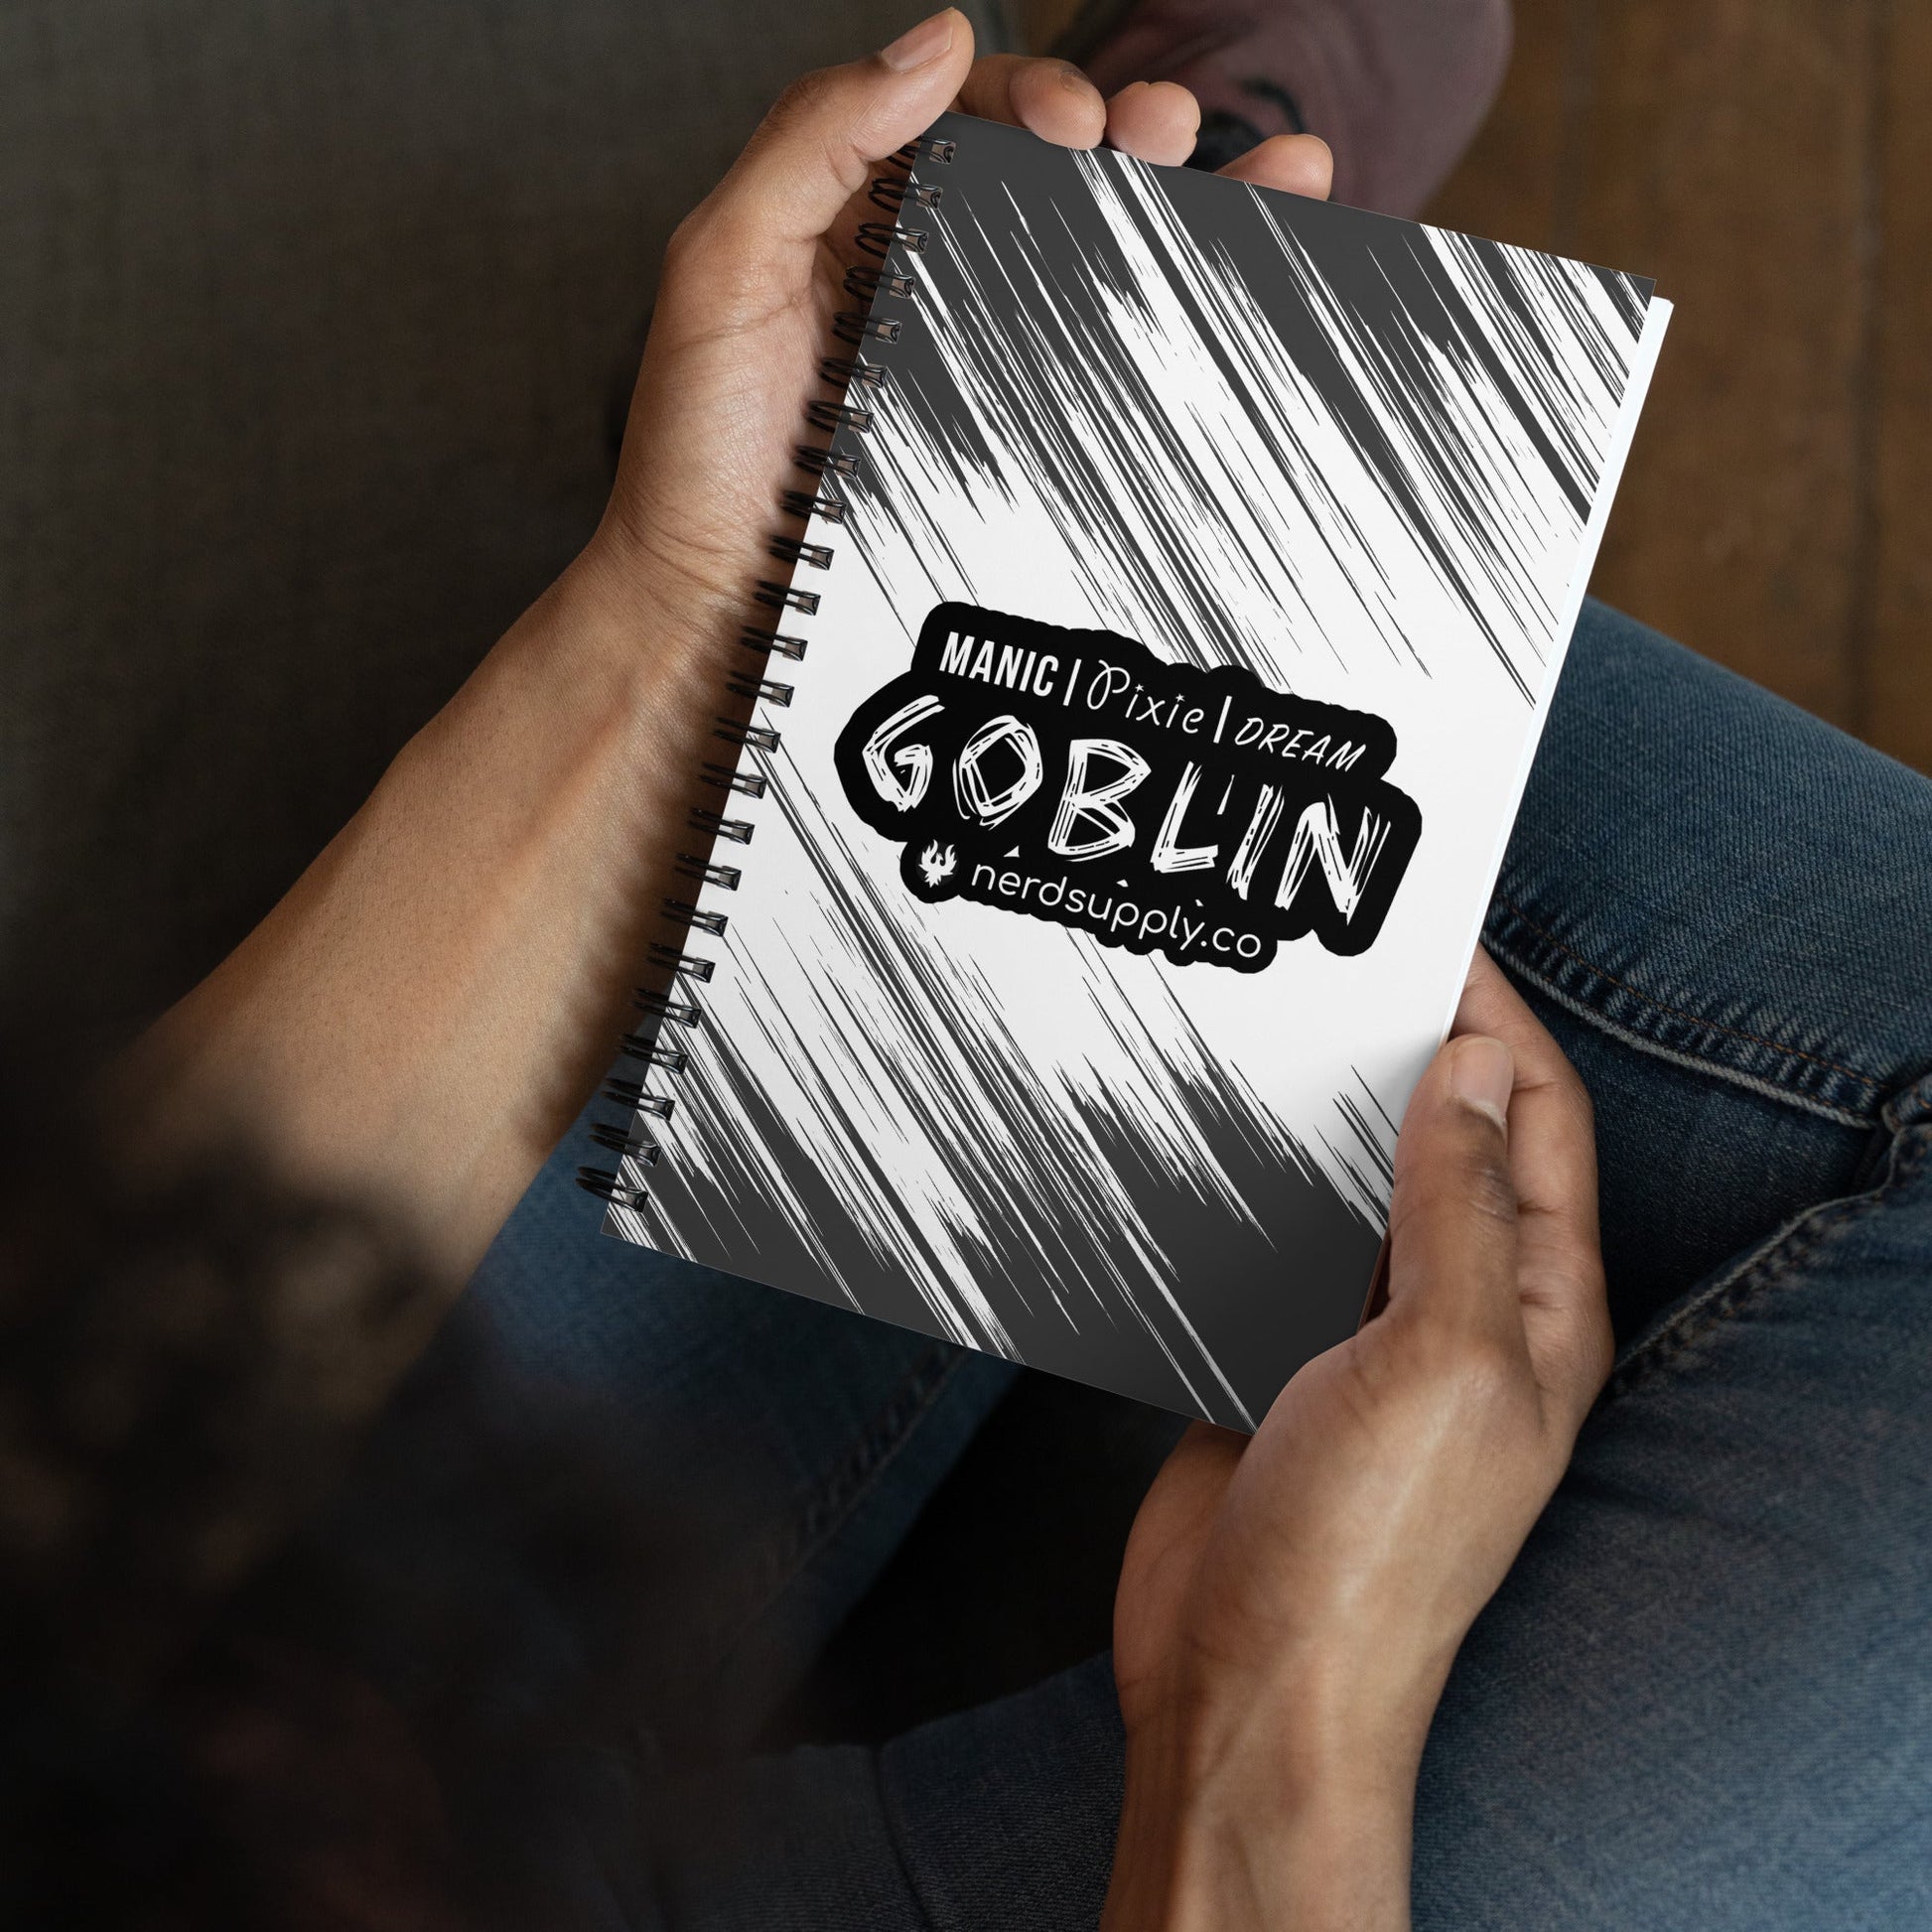 Manic Pixie Dream Goblin Spiral notebook - The Nerd Supply Company